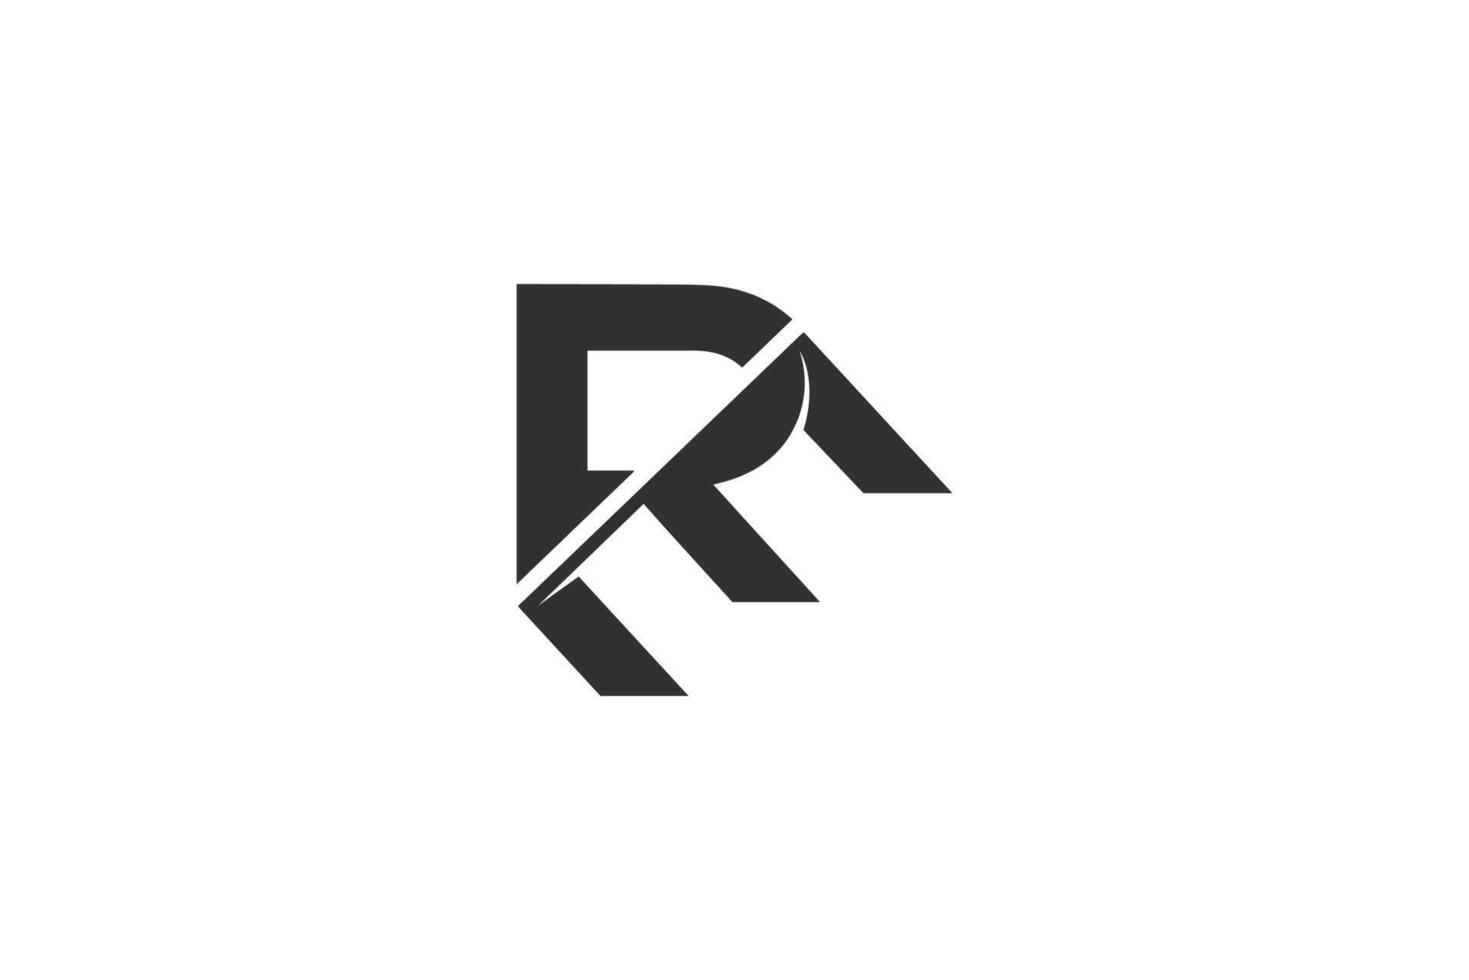 alfabet letters initialen monogram logo er, re, e en r vector